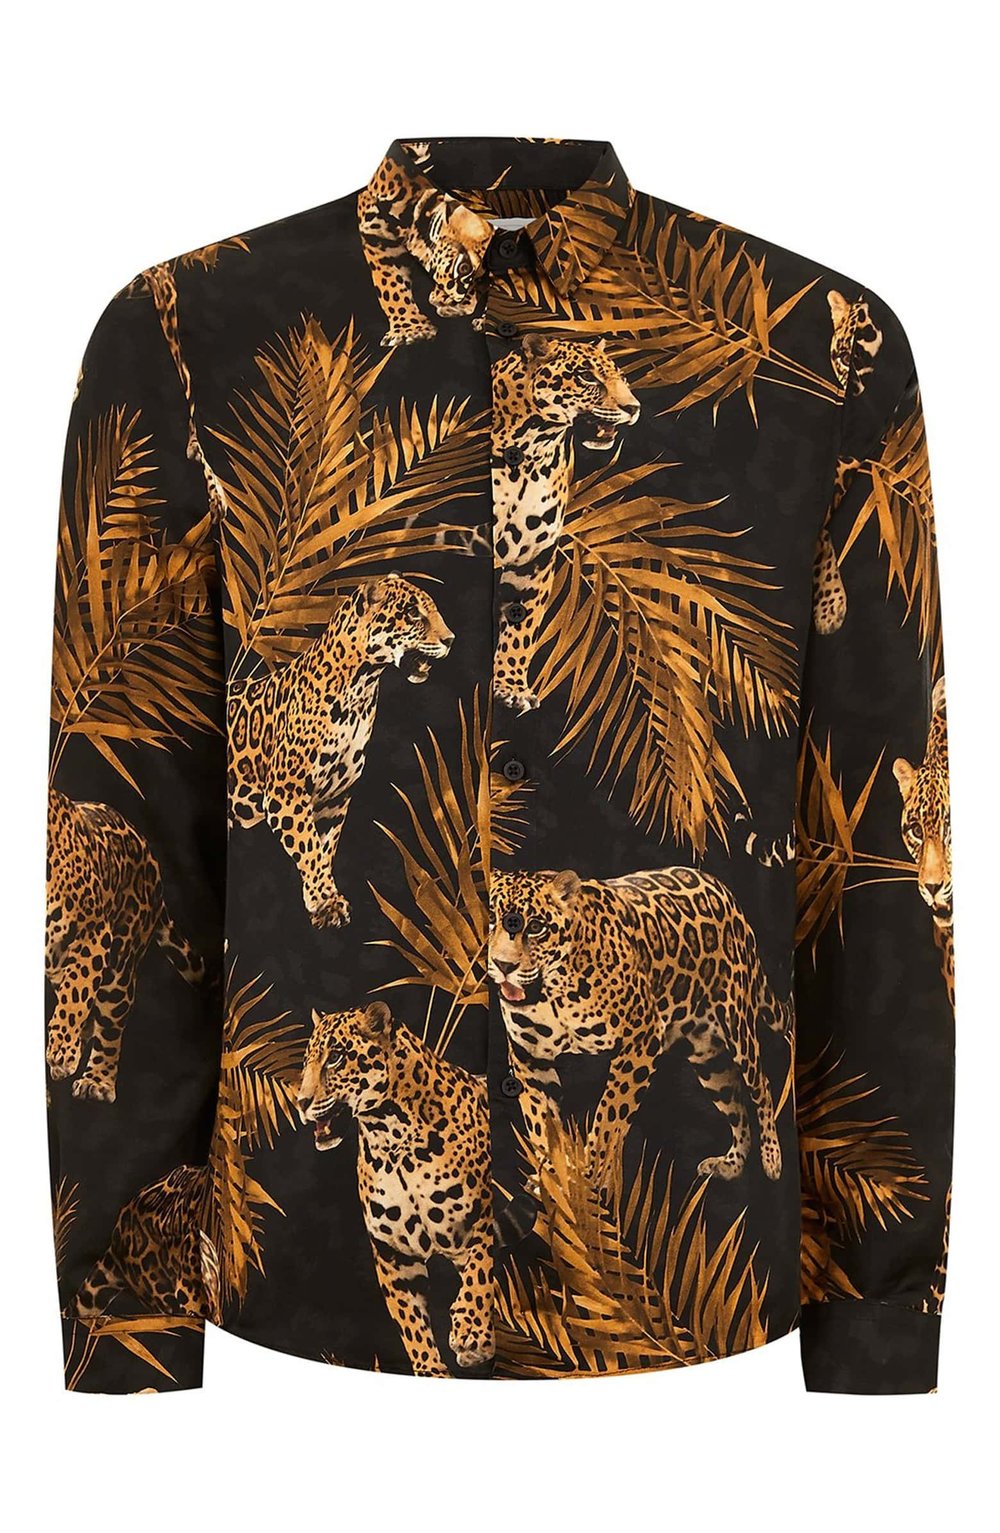 Topman Leopard Print shirt.jpeg